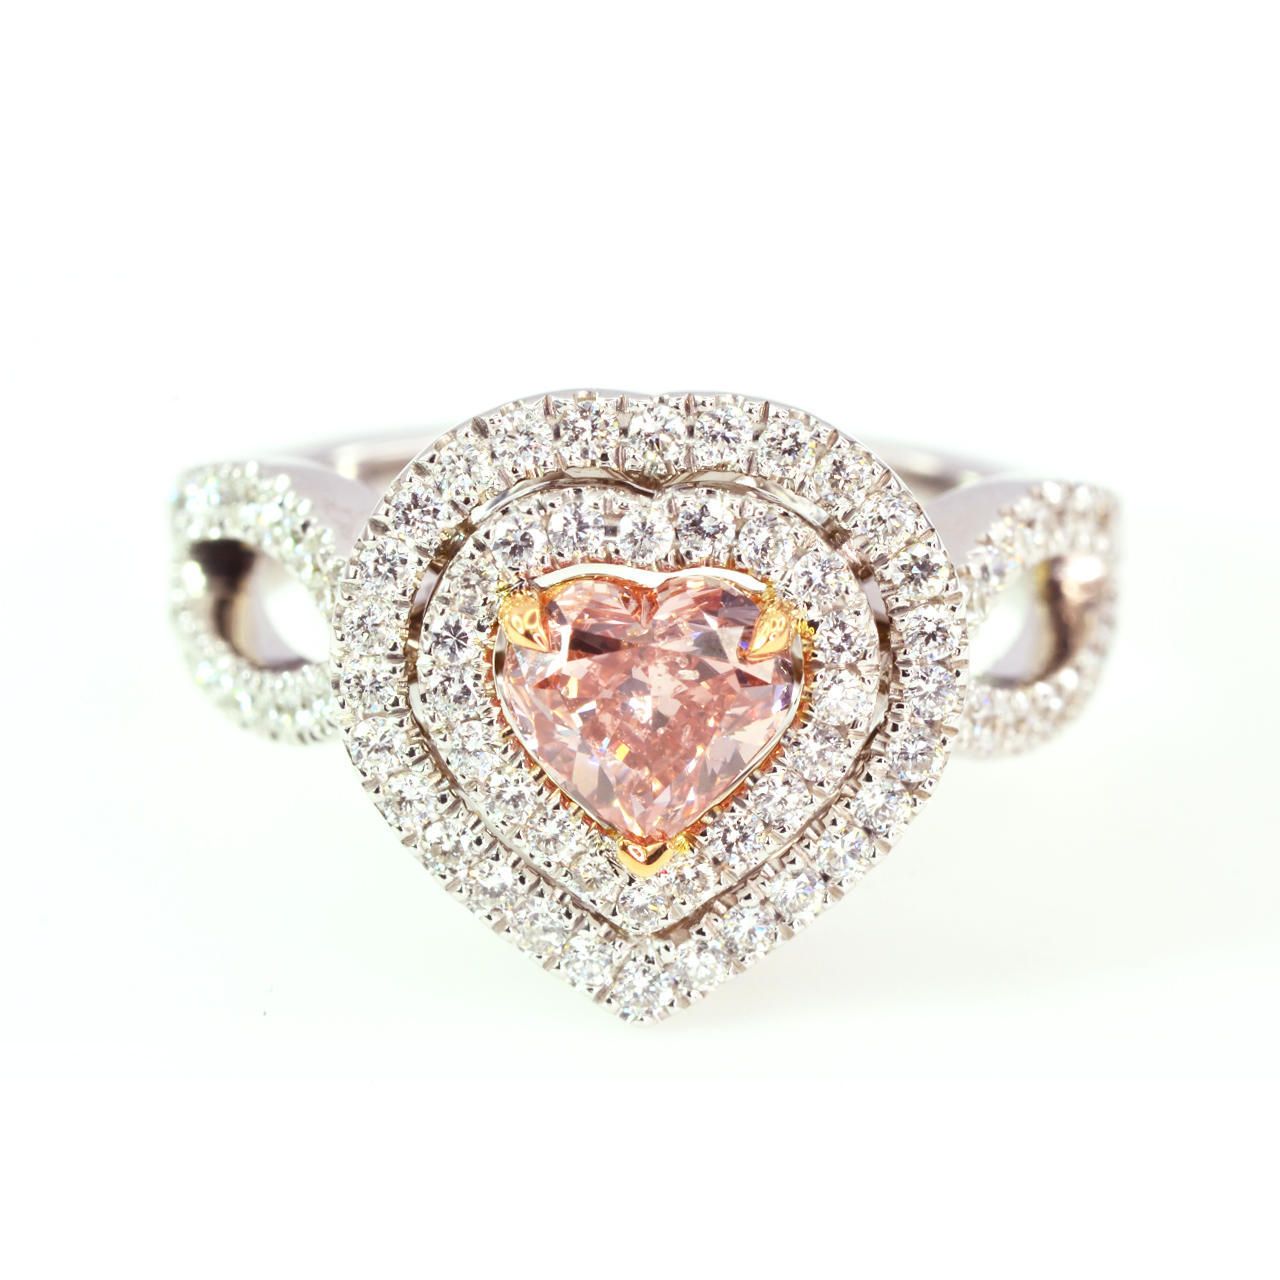 Fancy Orangy Pink Diamond Ring, 0.80 Carat, Heart shape, GIA Certified, 2155569598